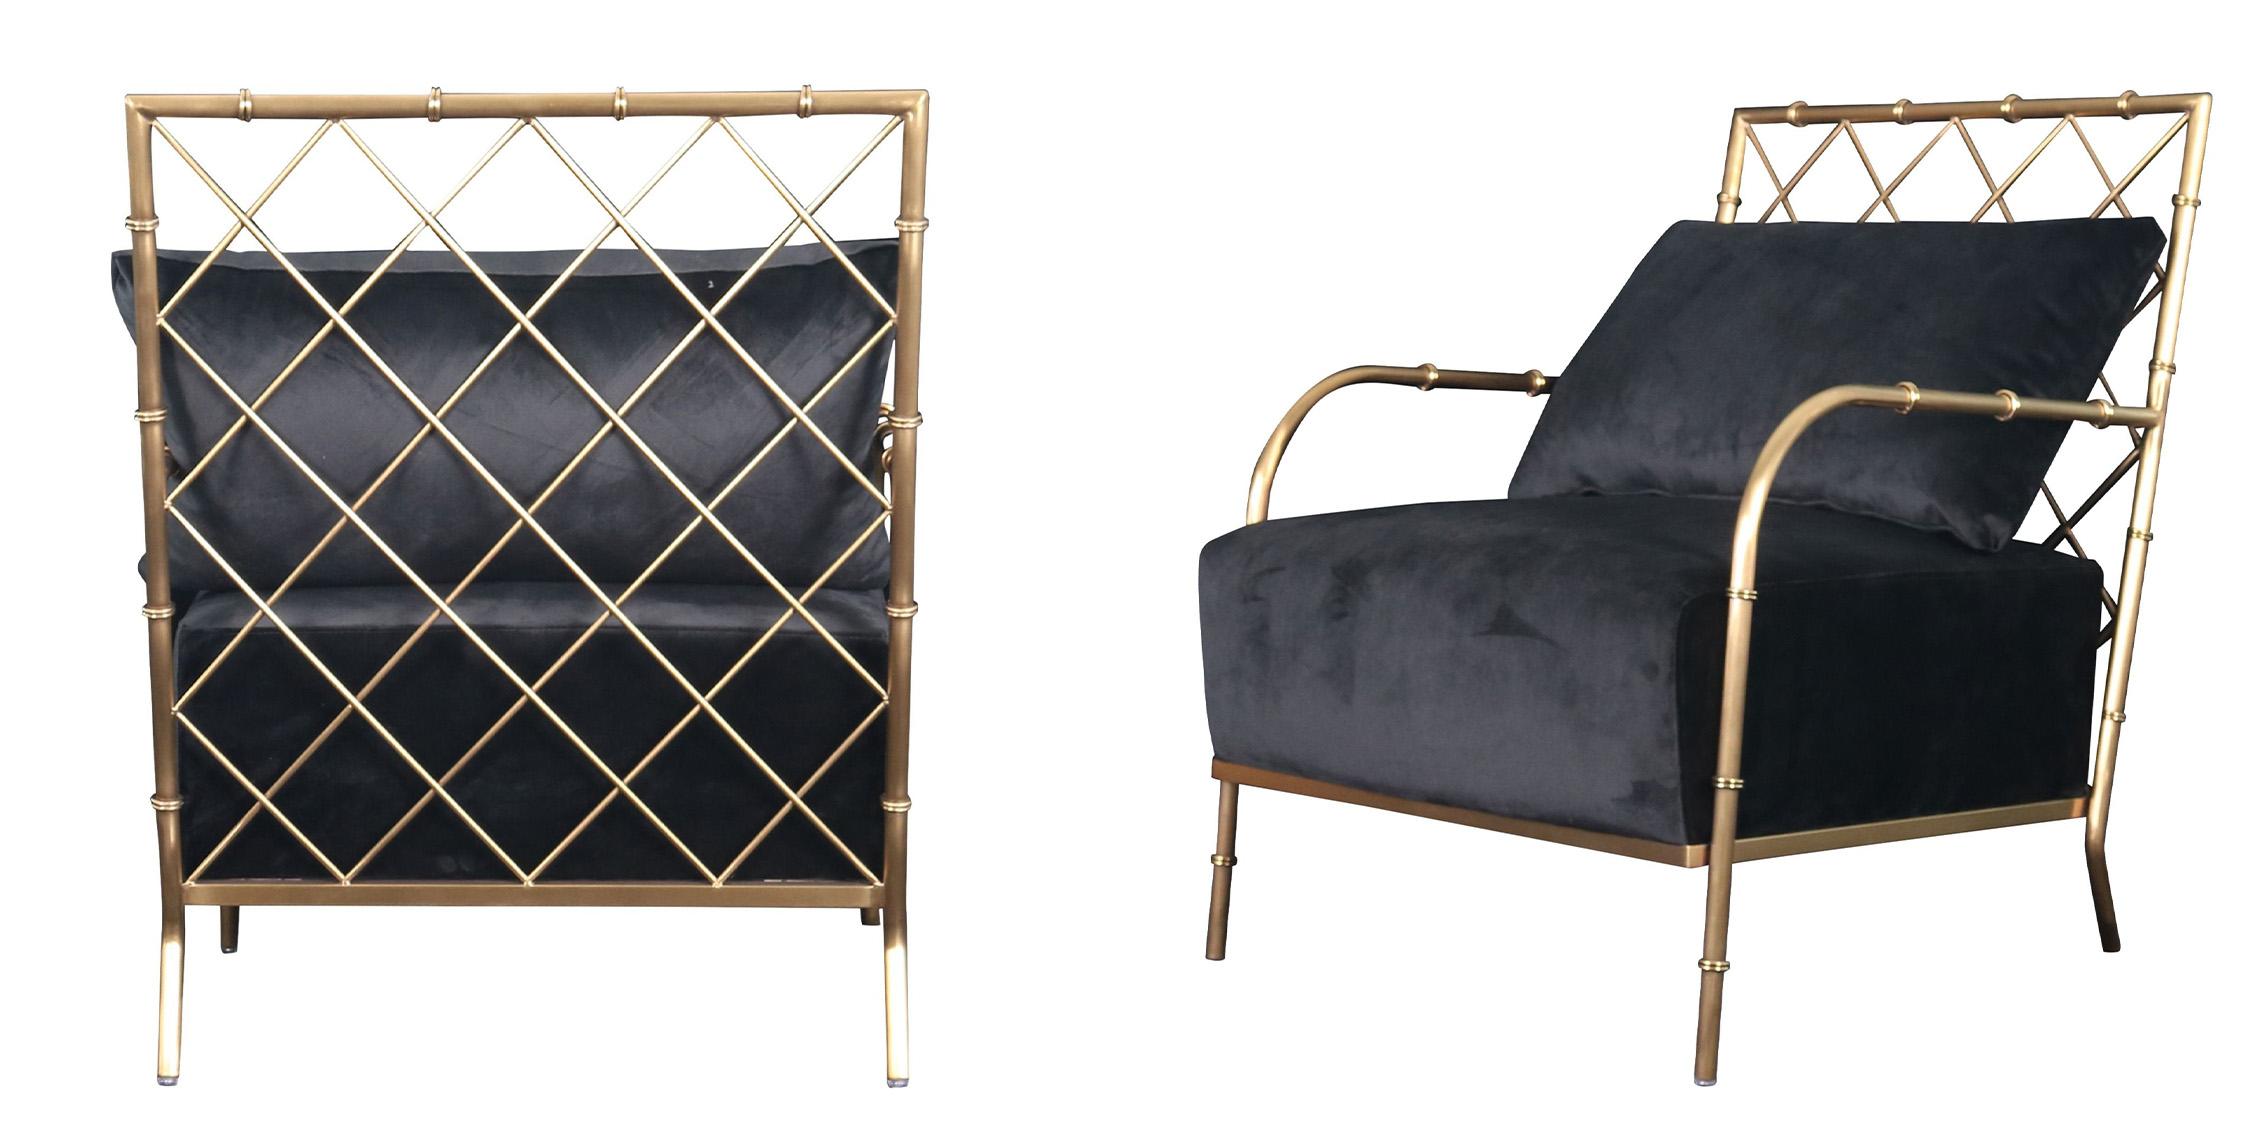 Contemporary, Modern Accent Chair Set VGMFOC-2211-BLK-CH-Set-2 VGMFOC-2211-BLK-CH-Set-2 in Gold, Black Fabric